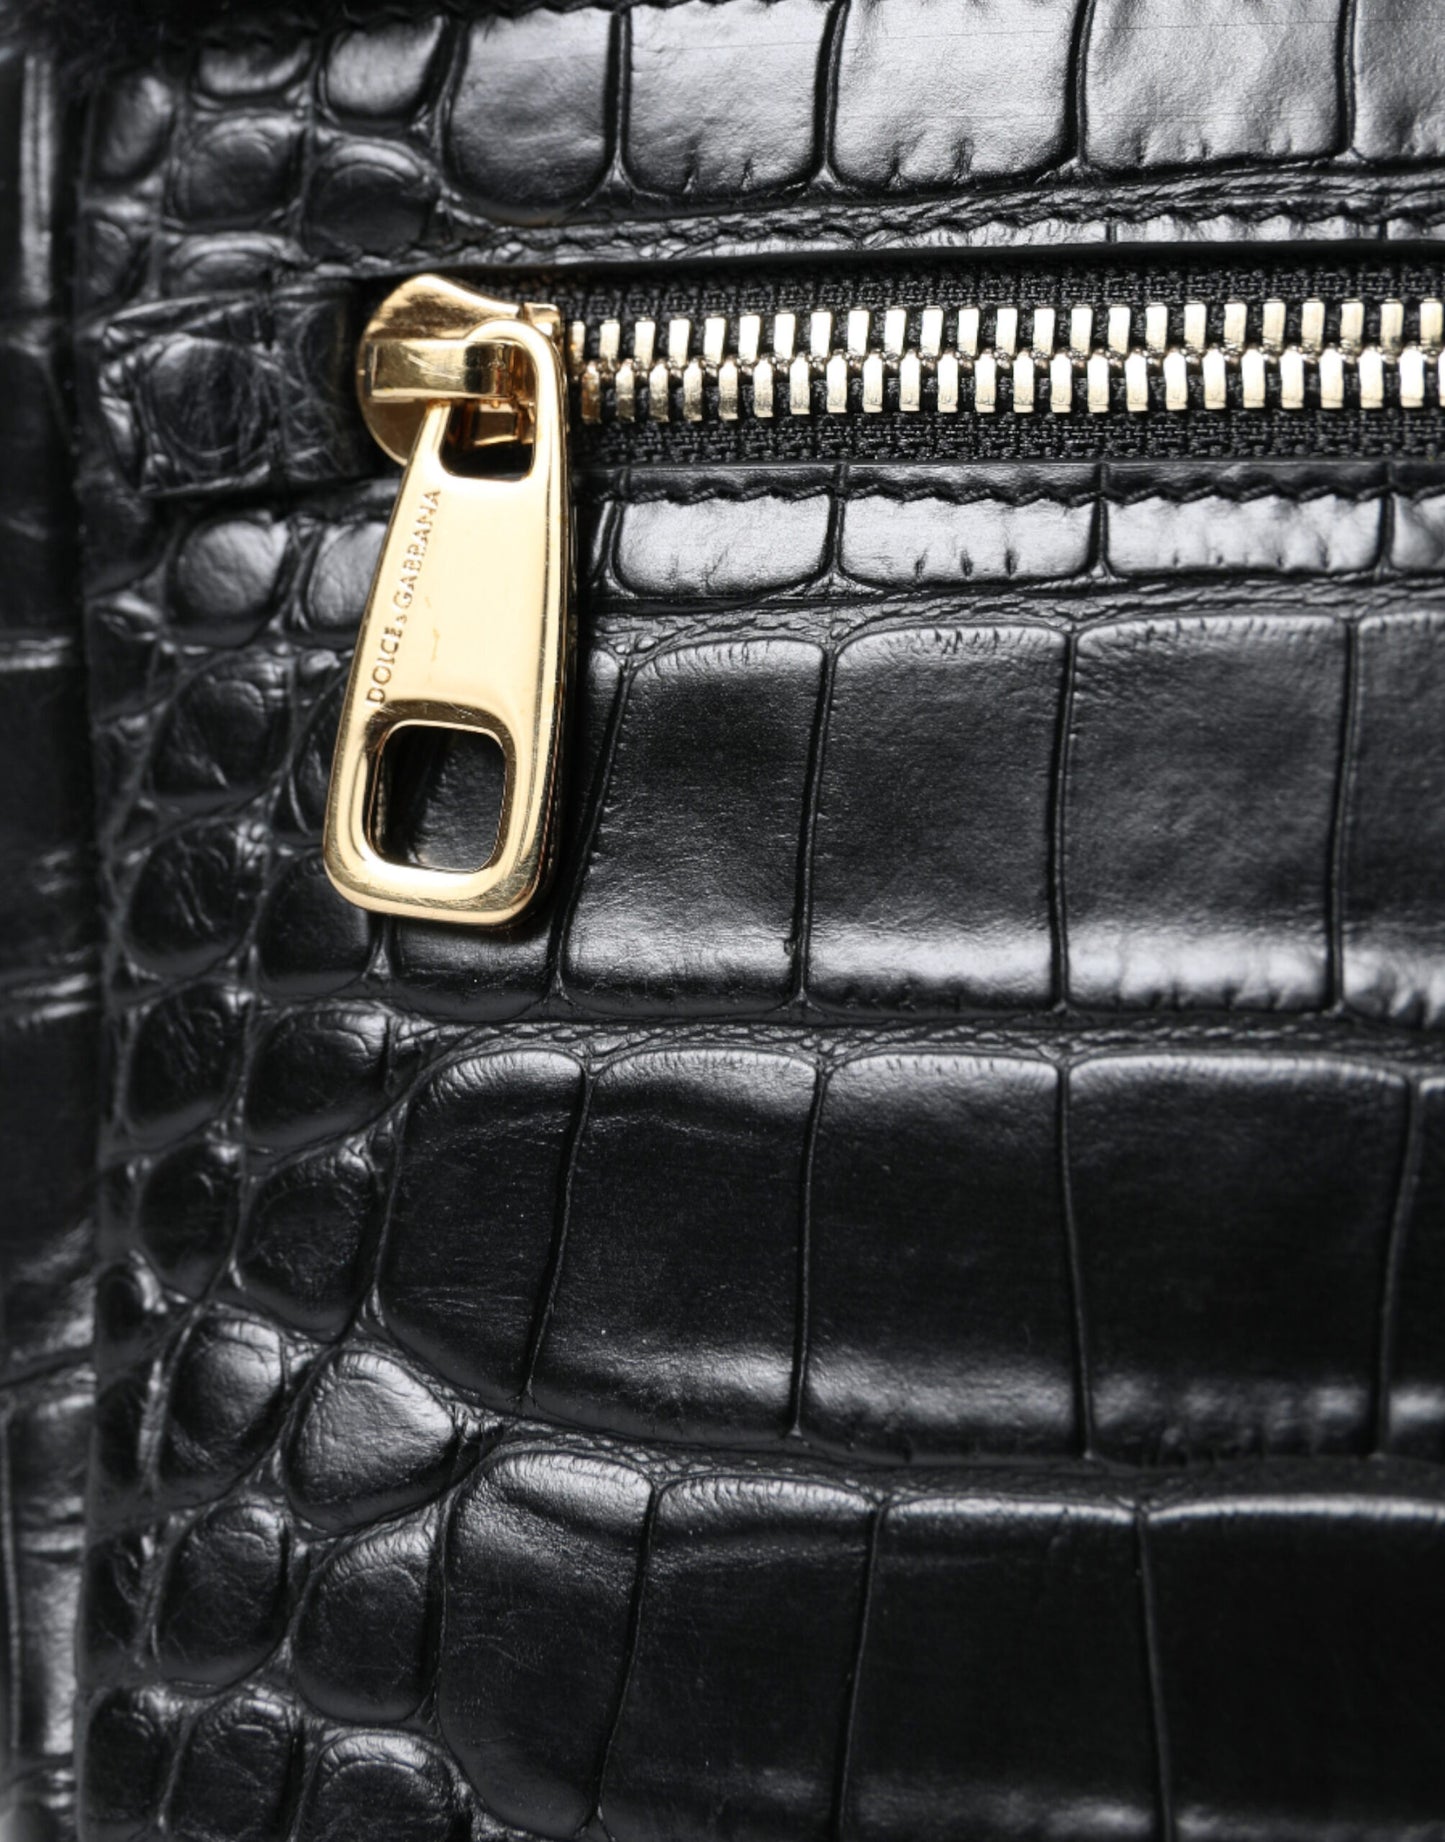 Exquisite Croc-Embossed Panther Shoulder Bag